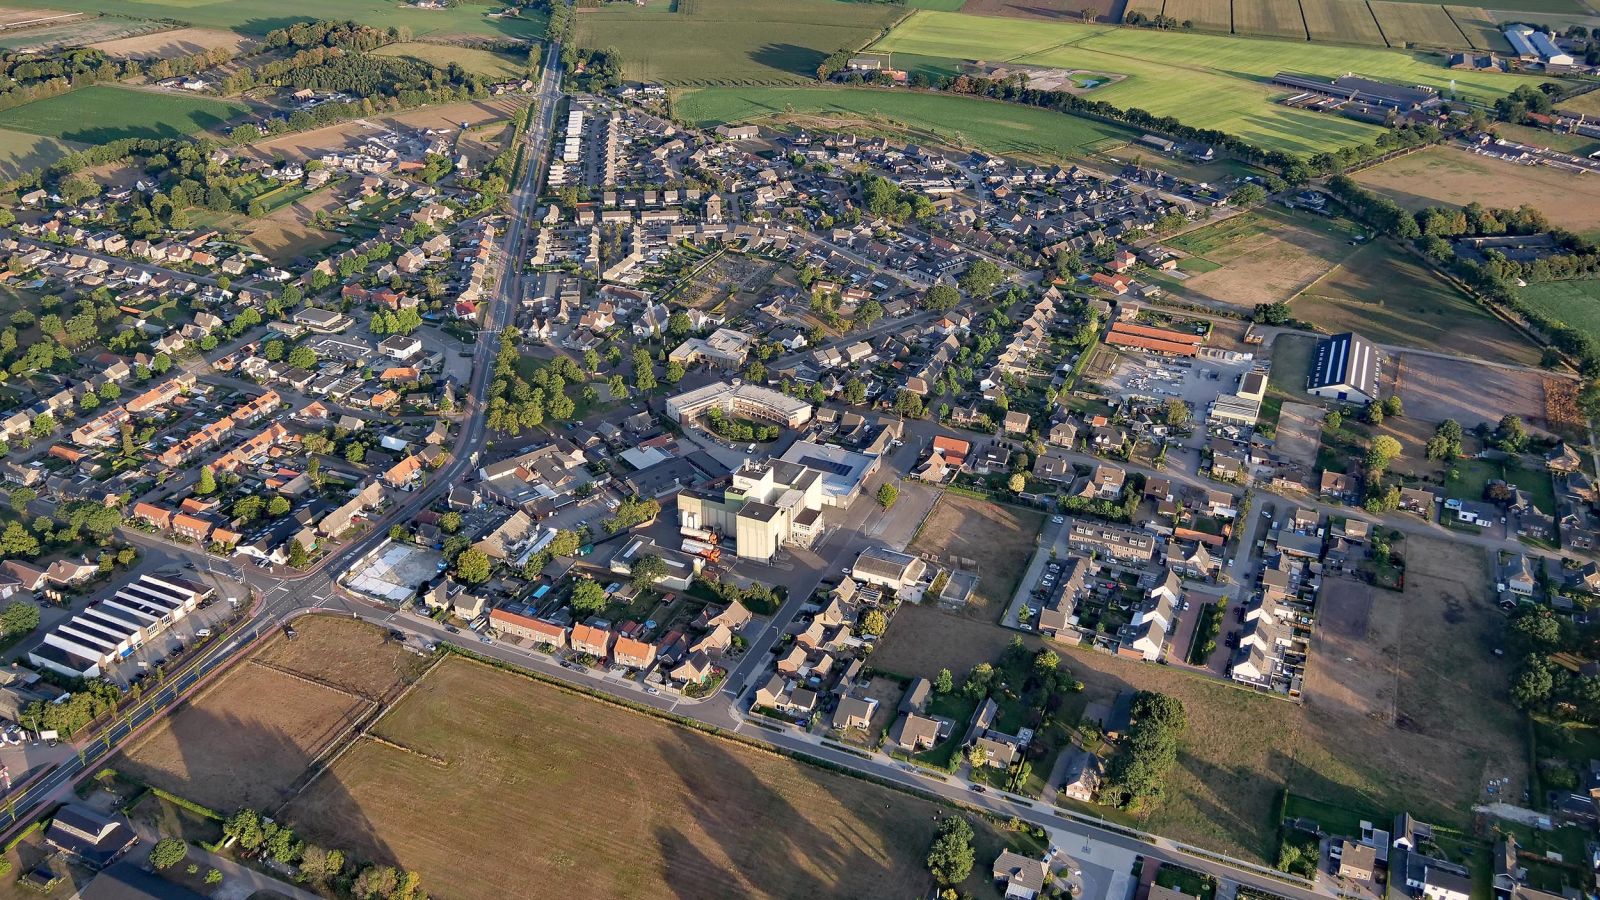 Luchtfoto van het dorp Ysselsteyn